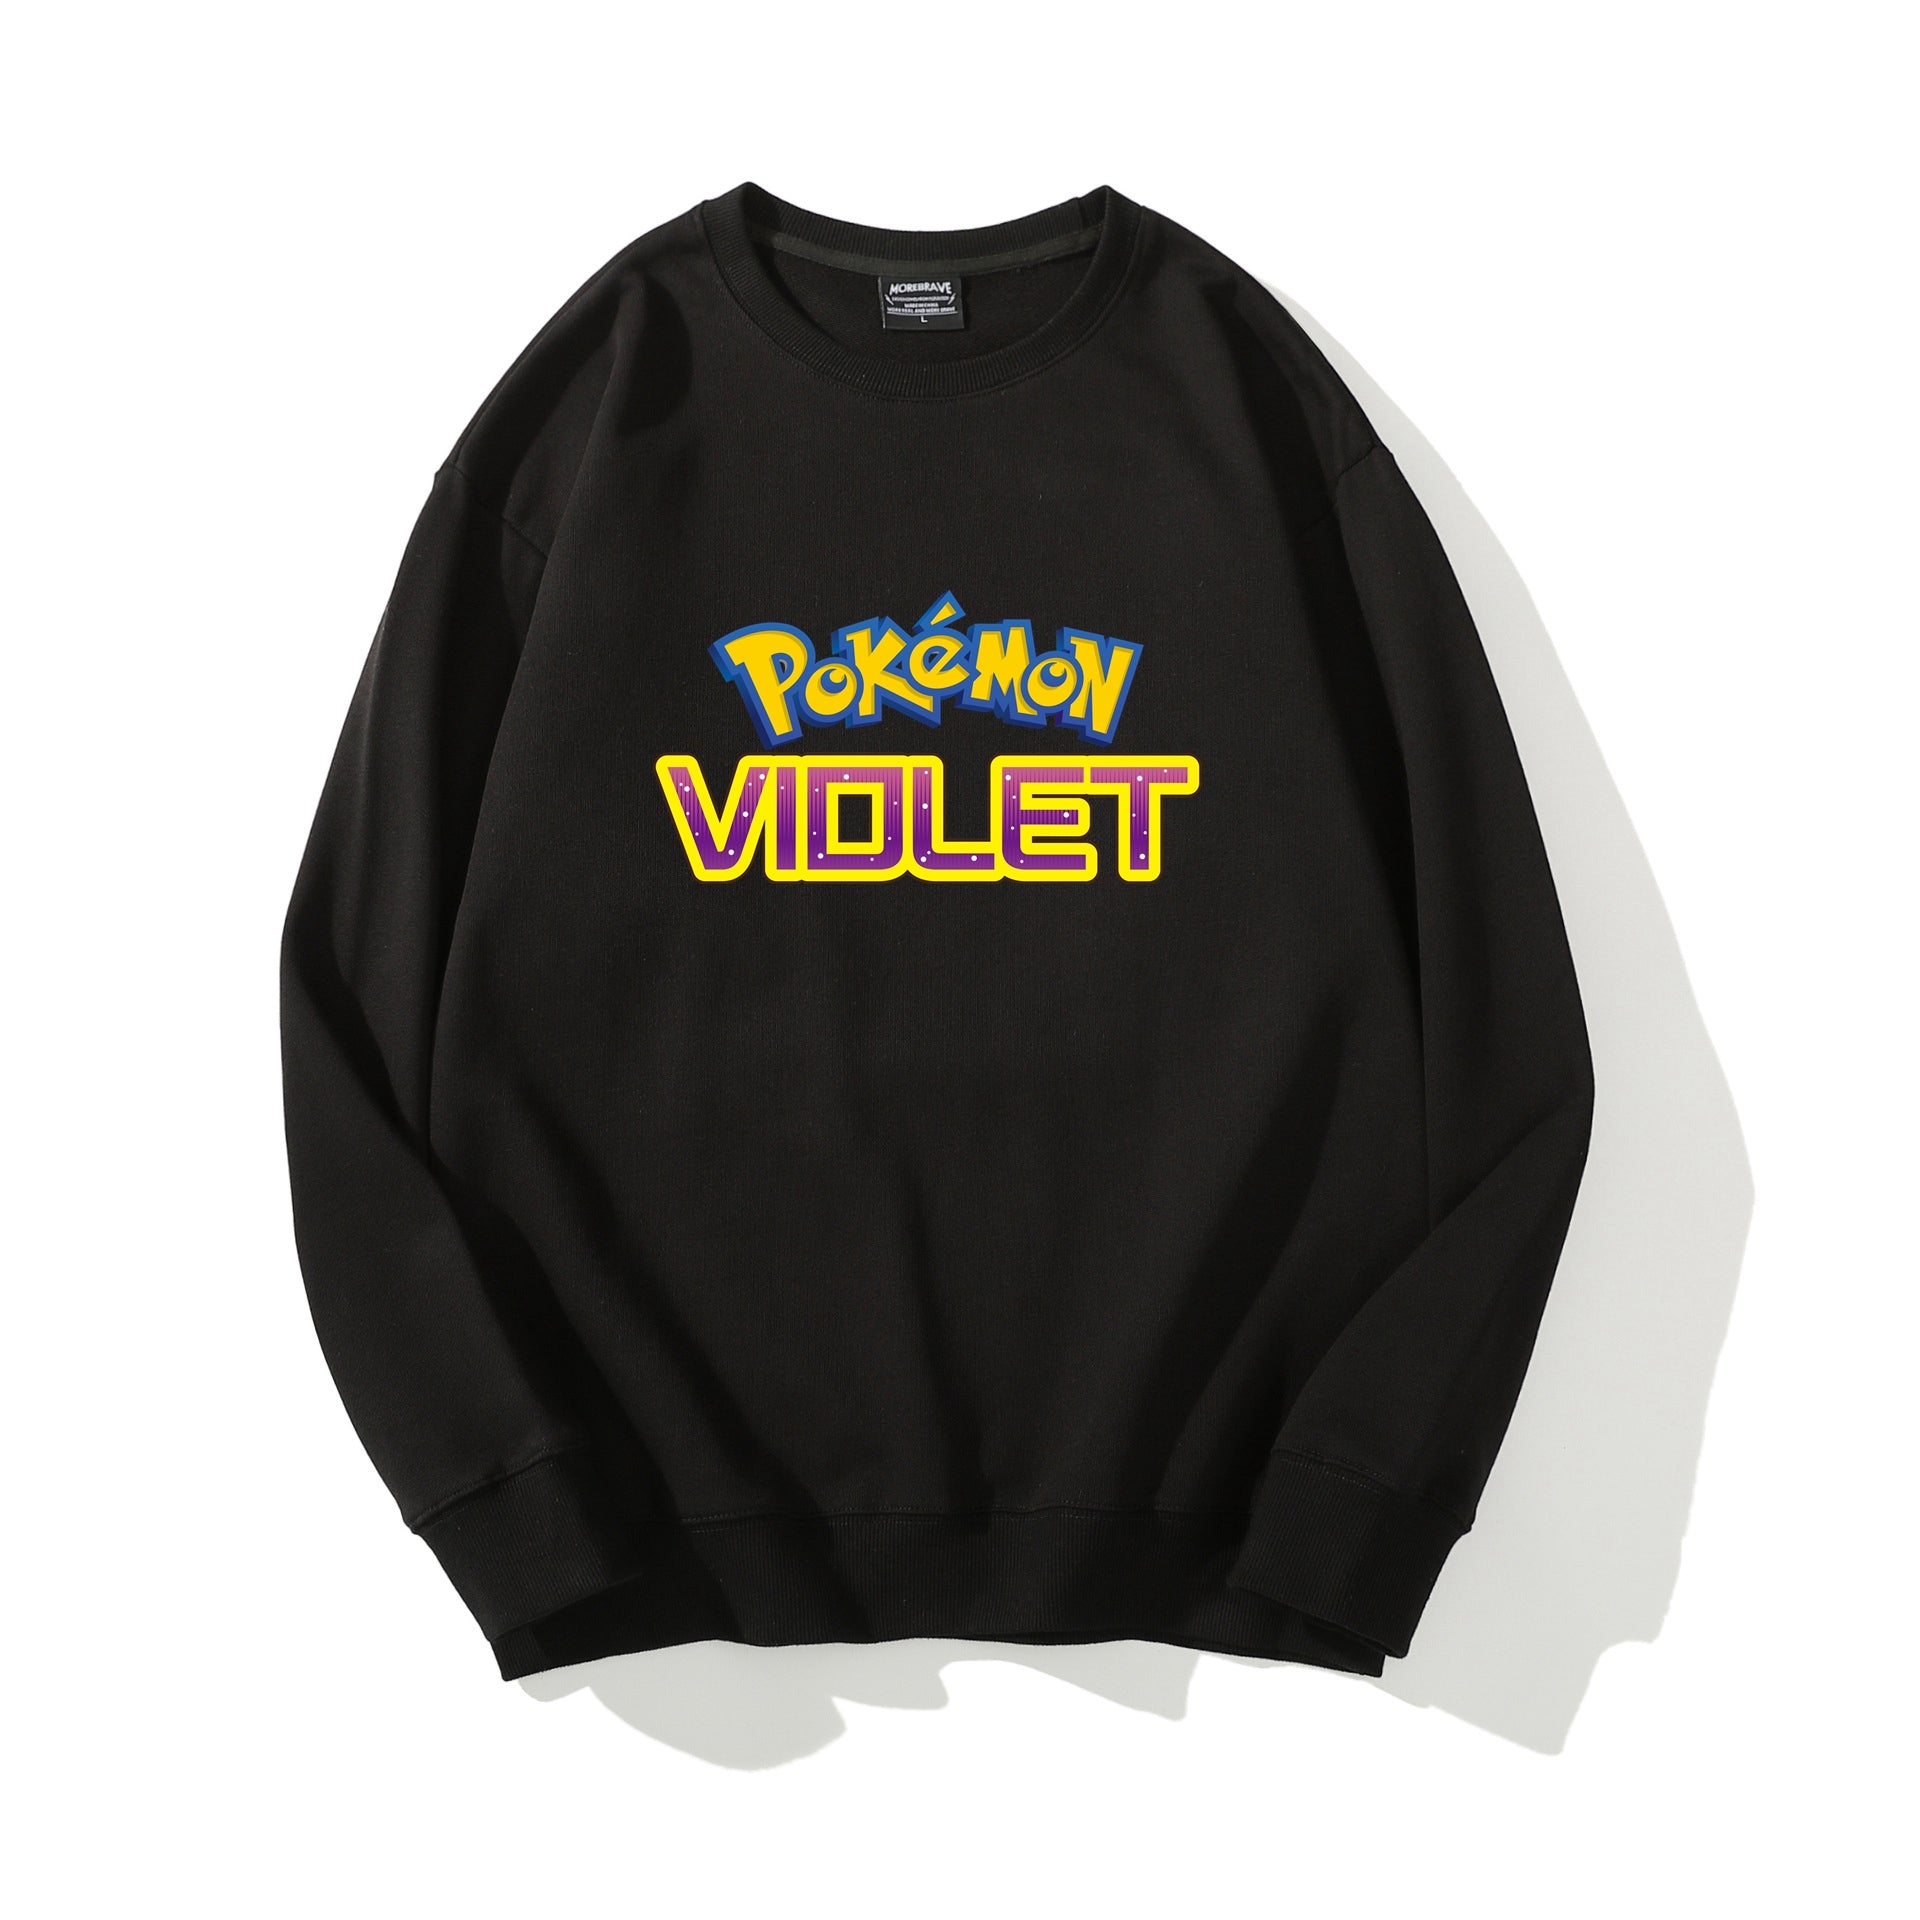 Pokemon Violet Crew Neck Sweatshirt for Men Cotton Tops Winter Clothing